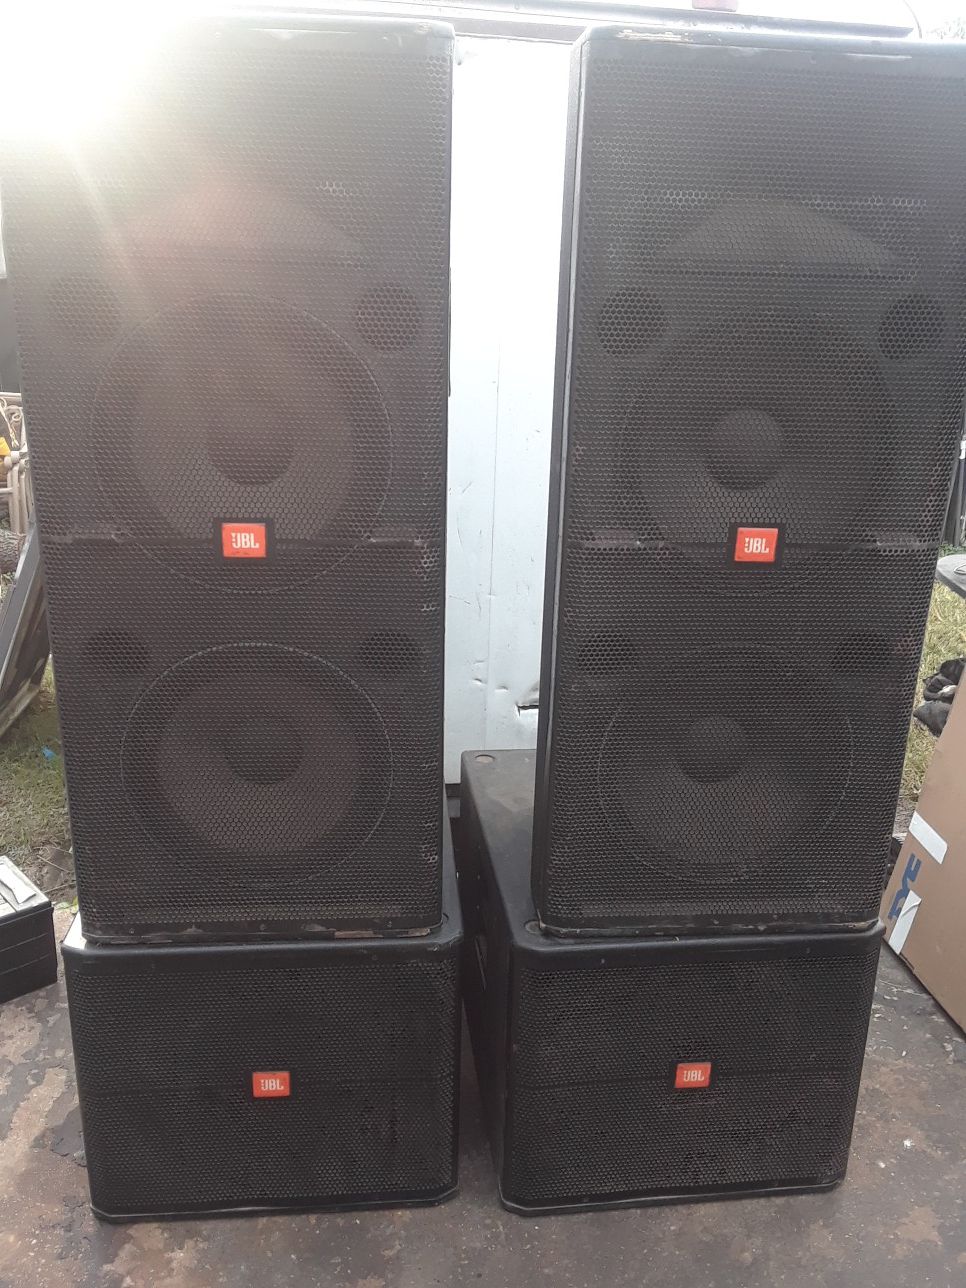 Jbl speakers dj equipment qsc amp